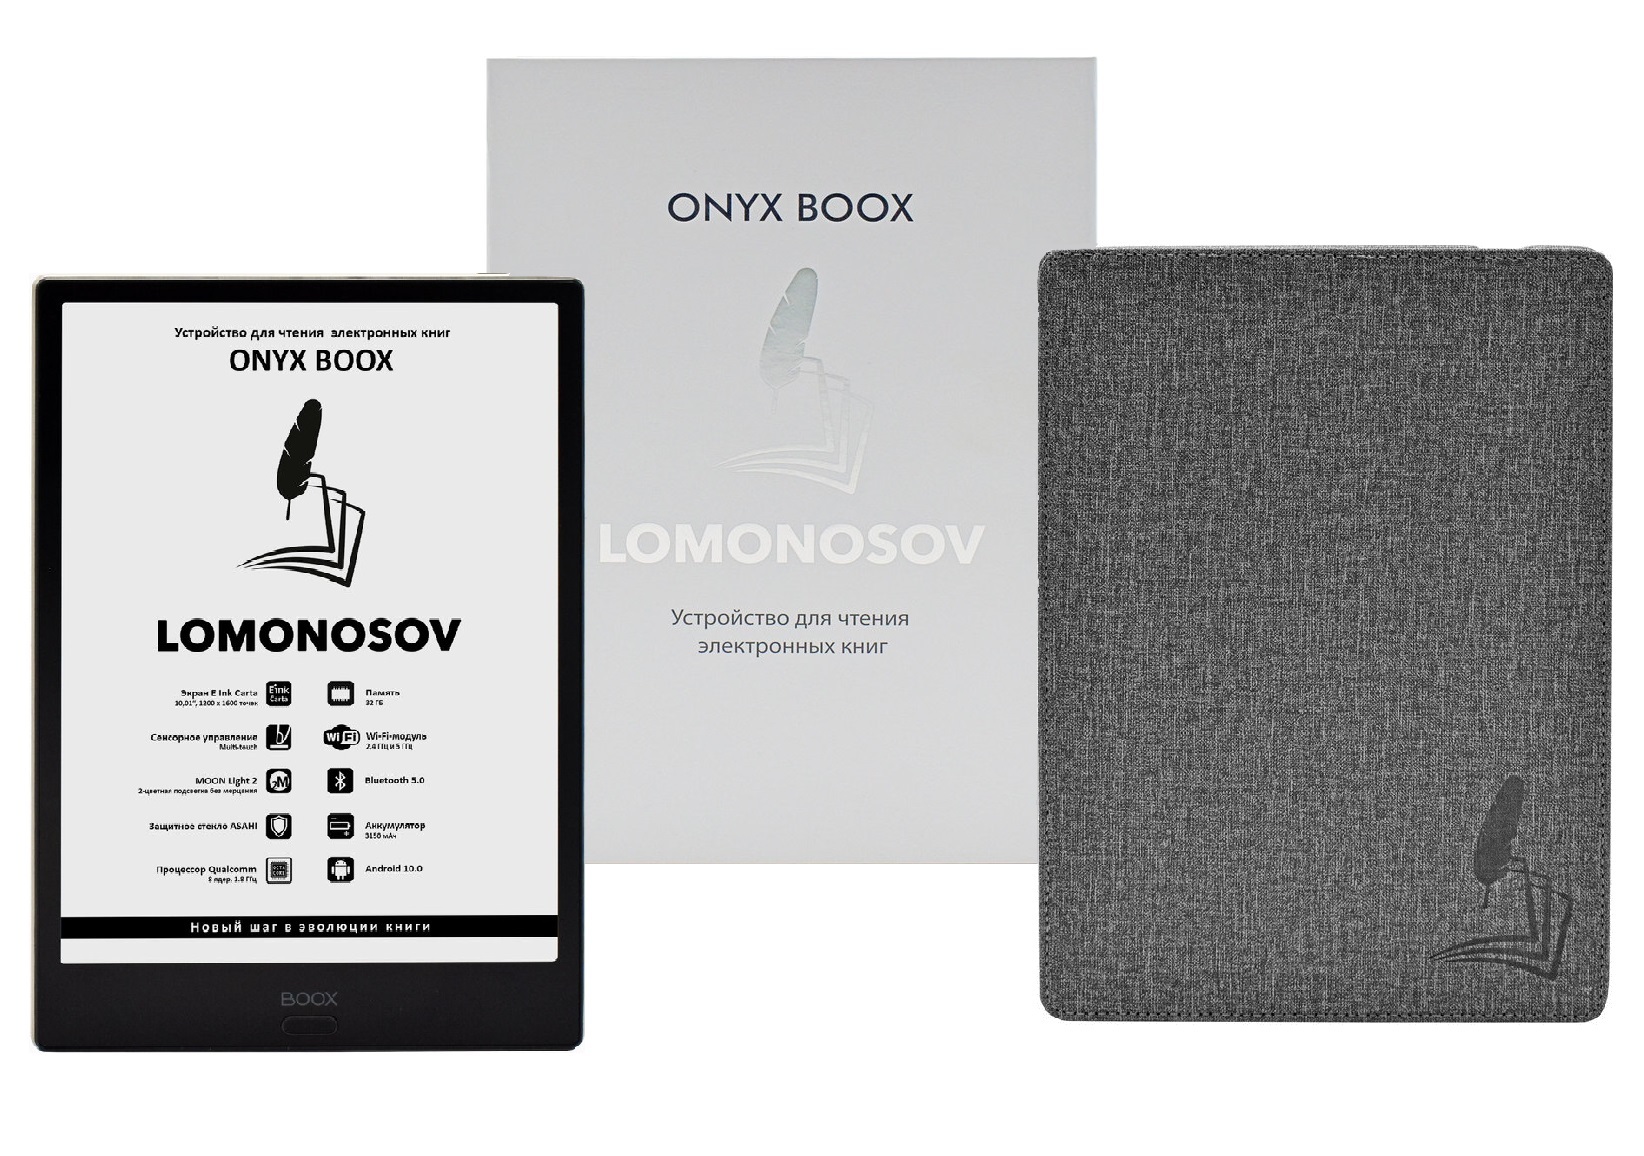 Электронная книга onyx отзывы. Onyx BOOX Lomonosov или POCKETBOOK X. 7.8" Чехол-книжка Onyx BOOX для Onyx BOOX Nova Air/ Nova Air c/ Edison серебристый. Электронная книга Onyx BOOX Nova Air c отзывы.